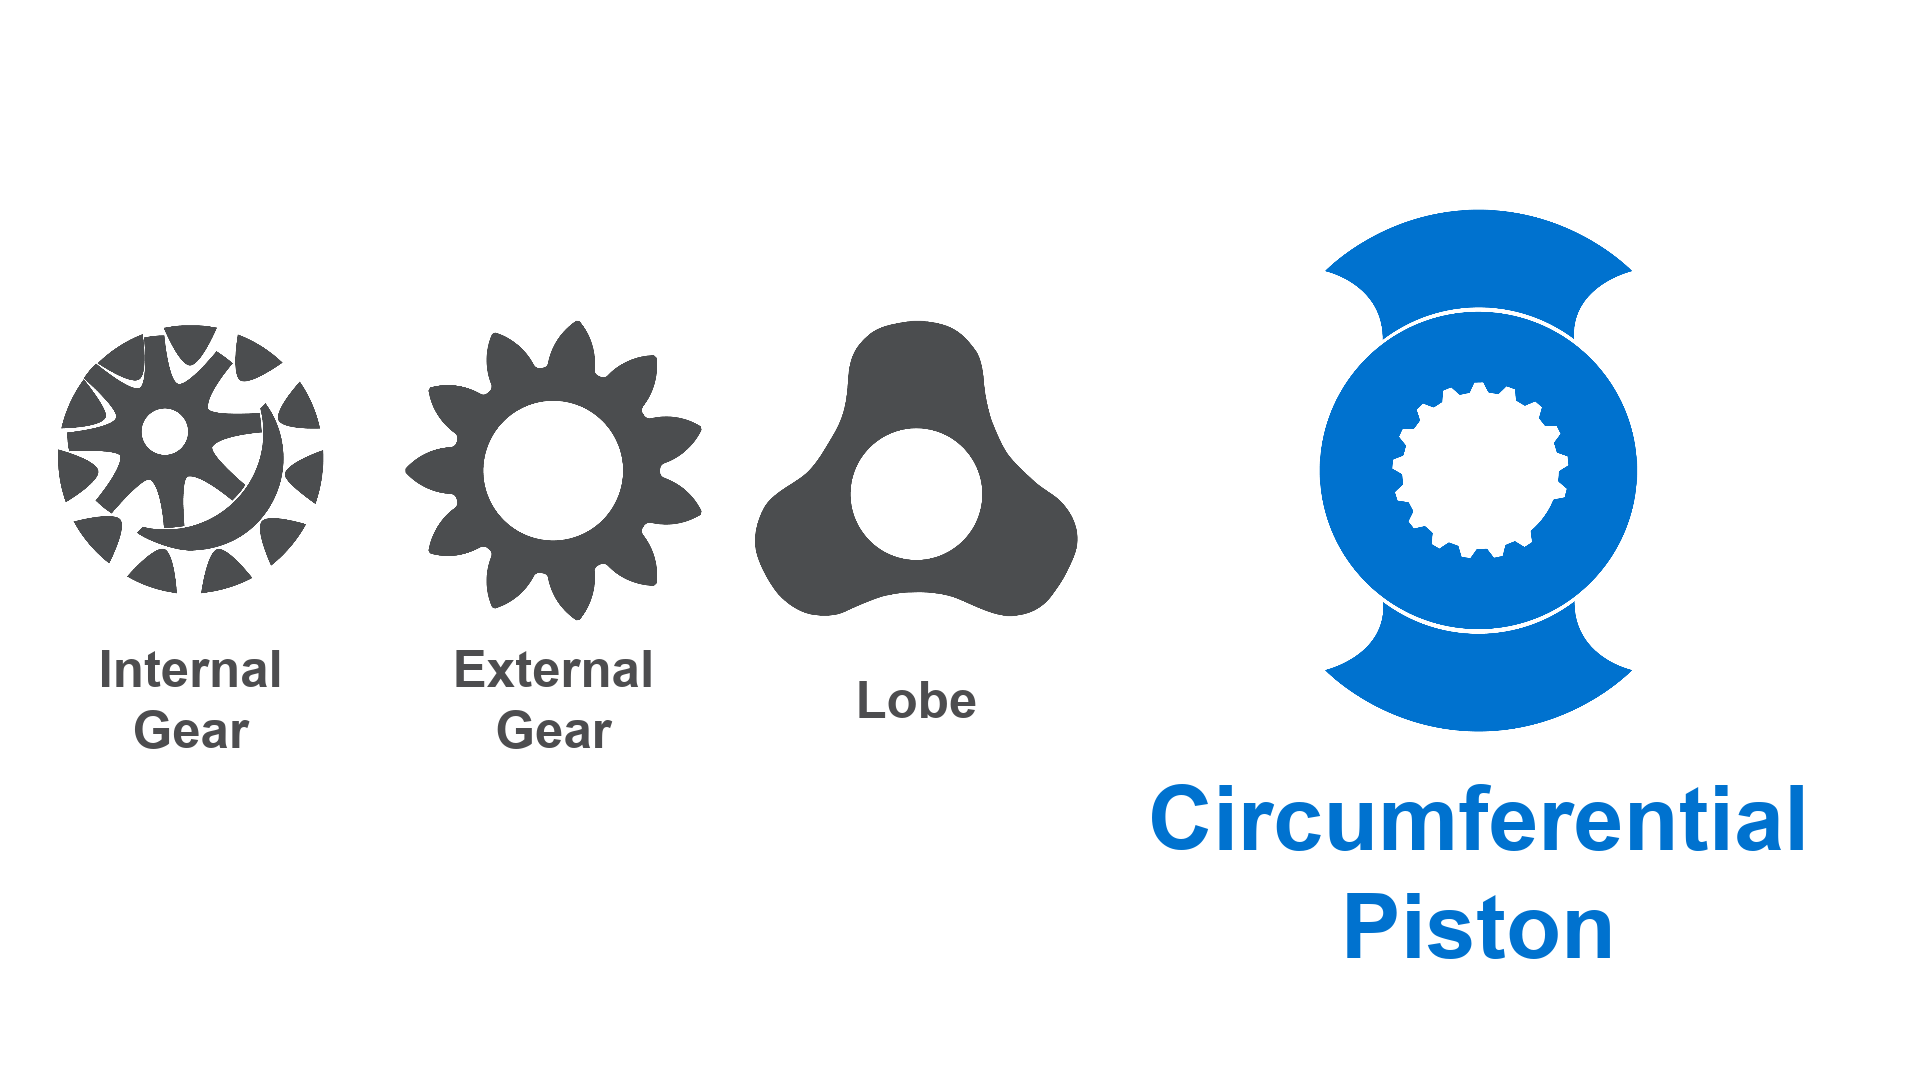 Internal gear, external gear, lobe, and circumferential piston pump rotor icons